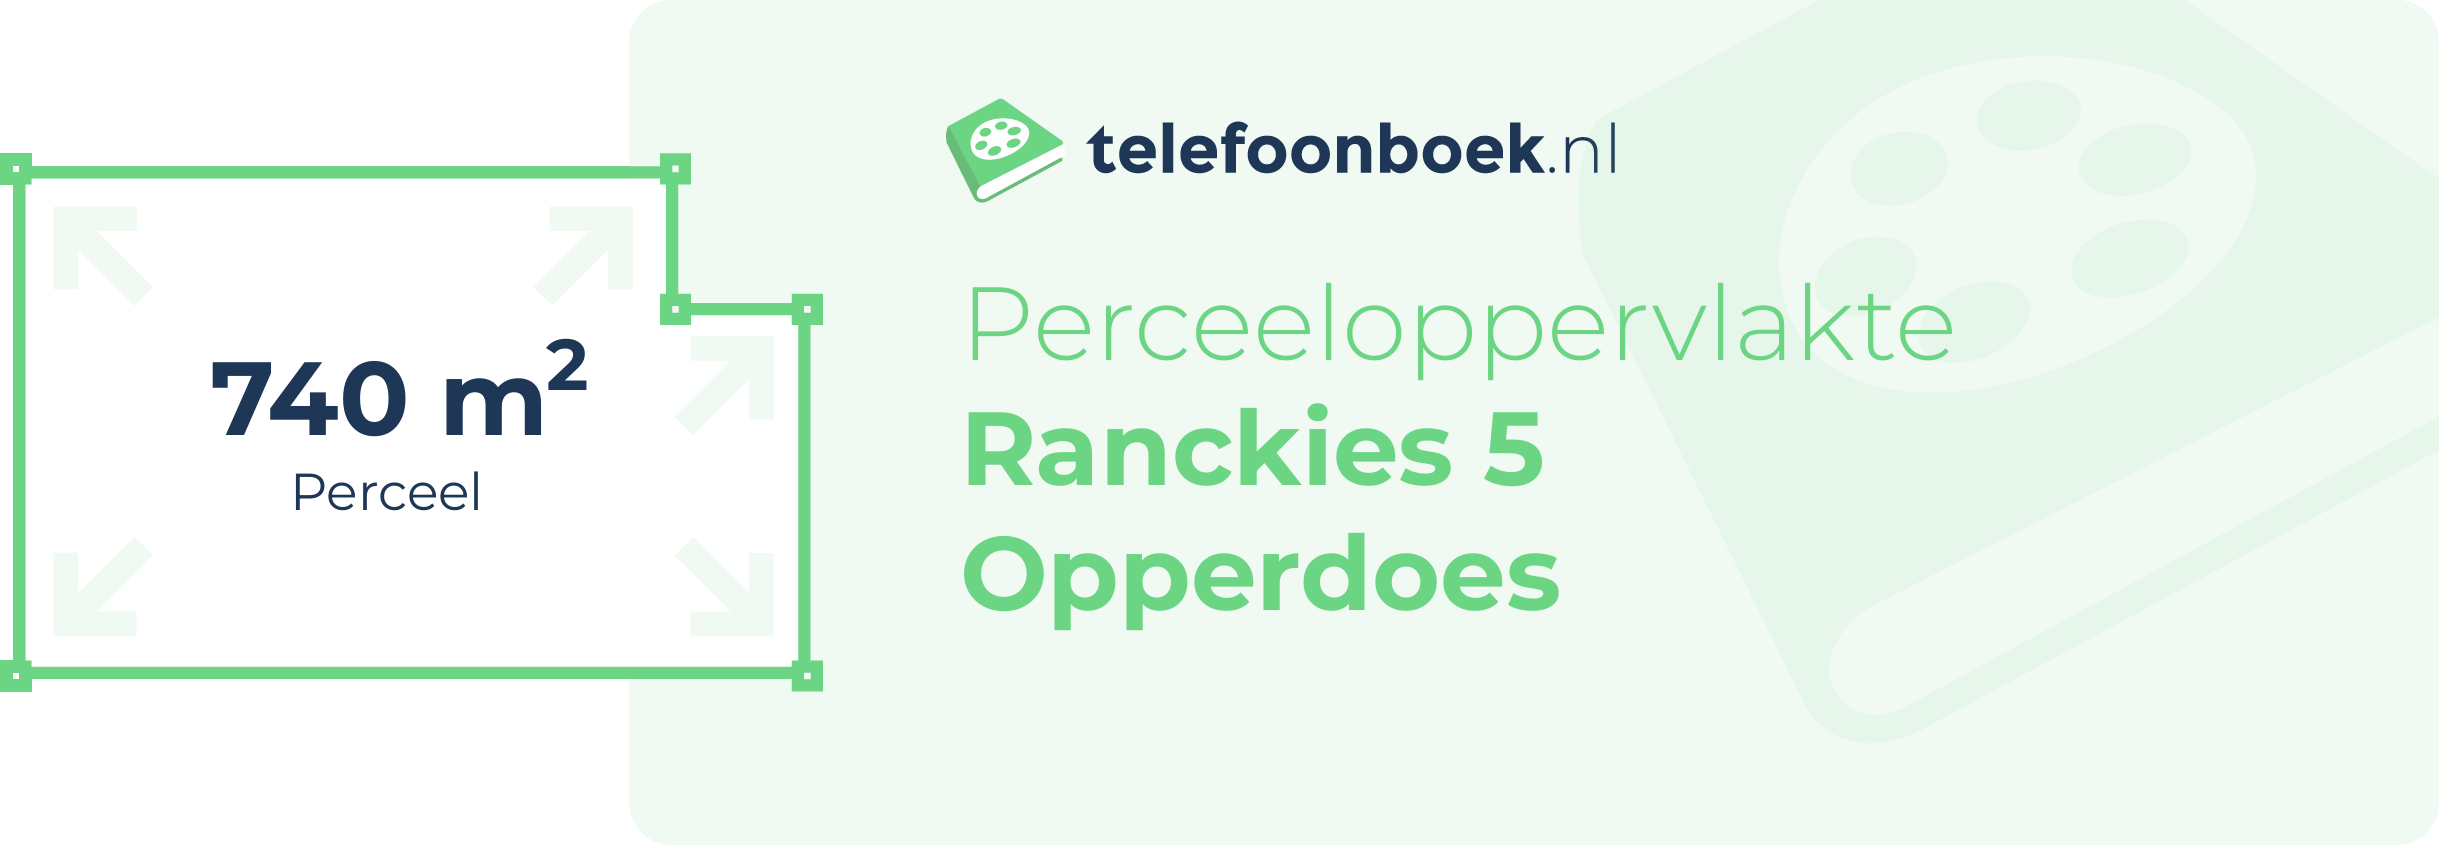 Perceeloppervlakte Ranckies 5 Opperdoes